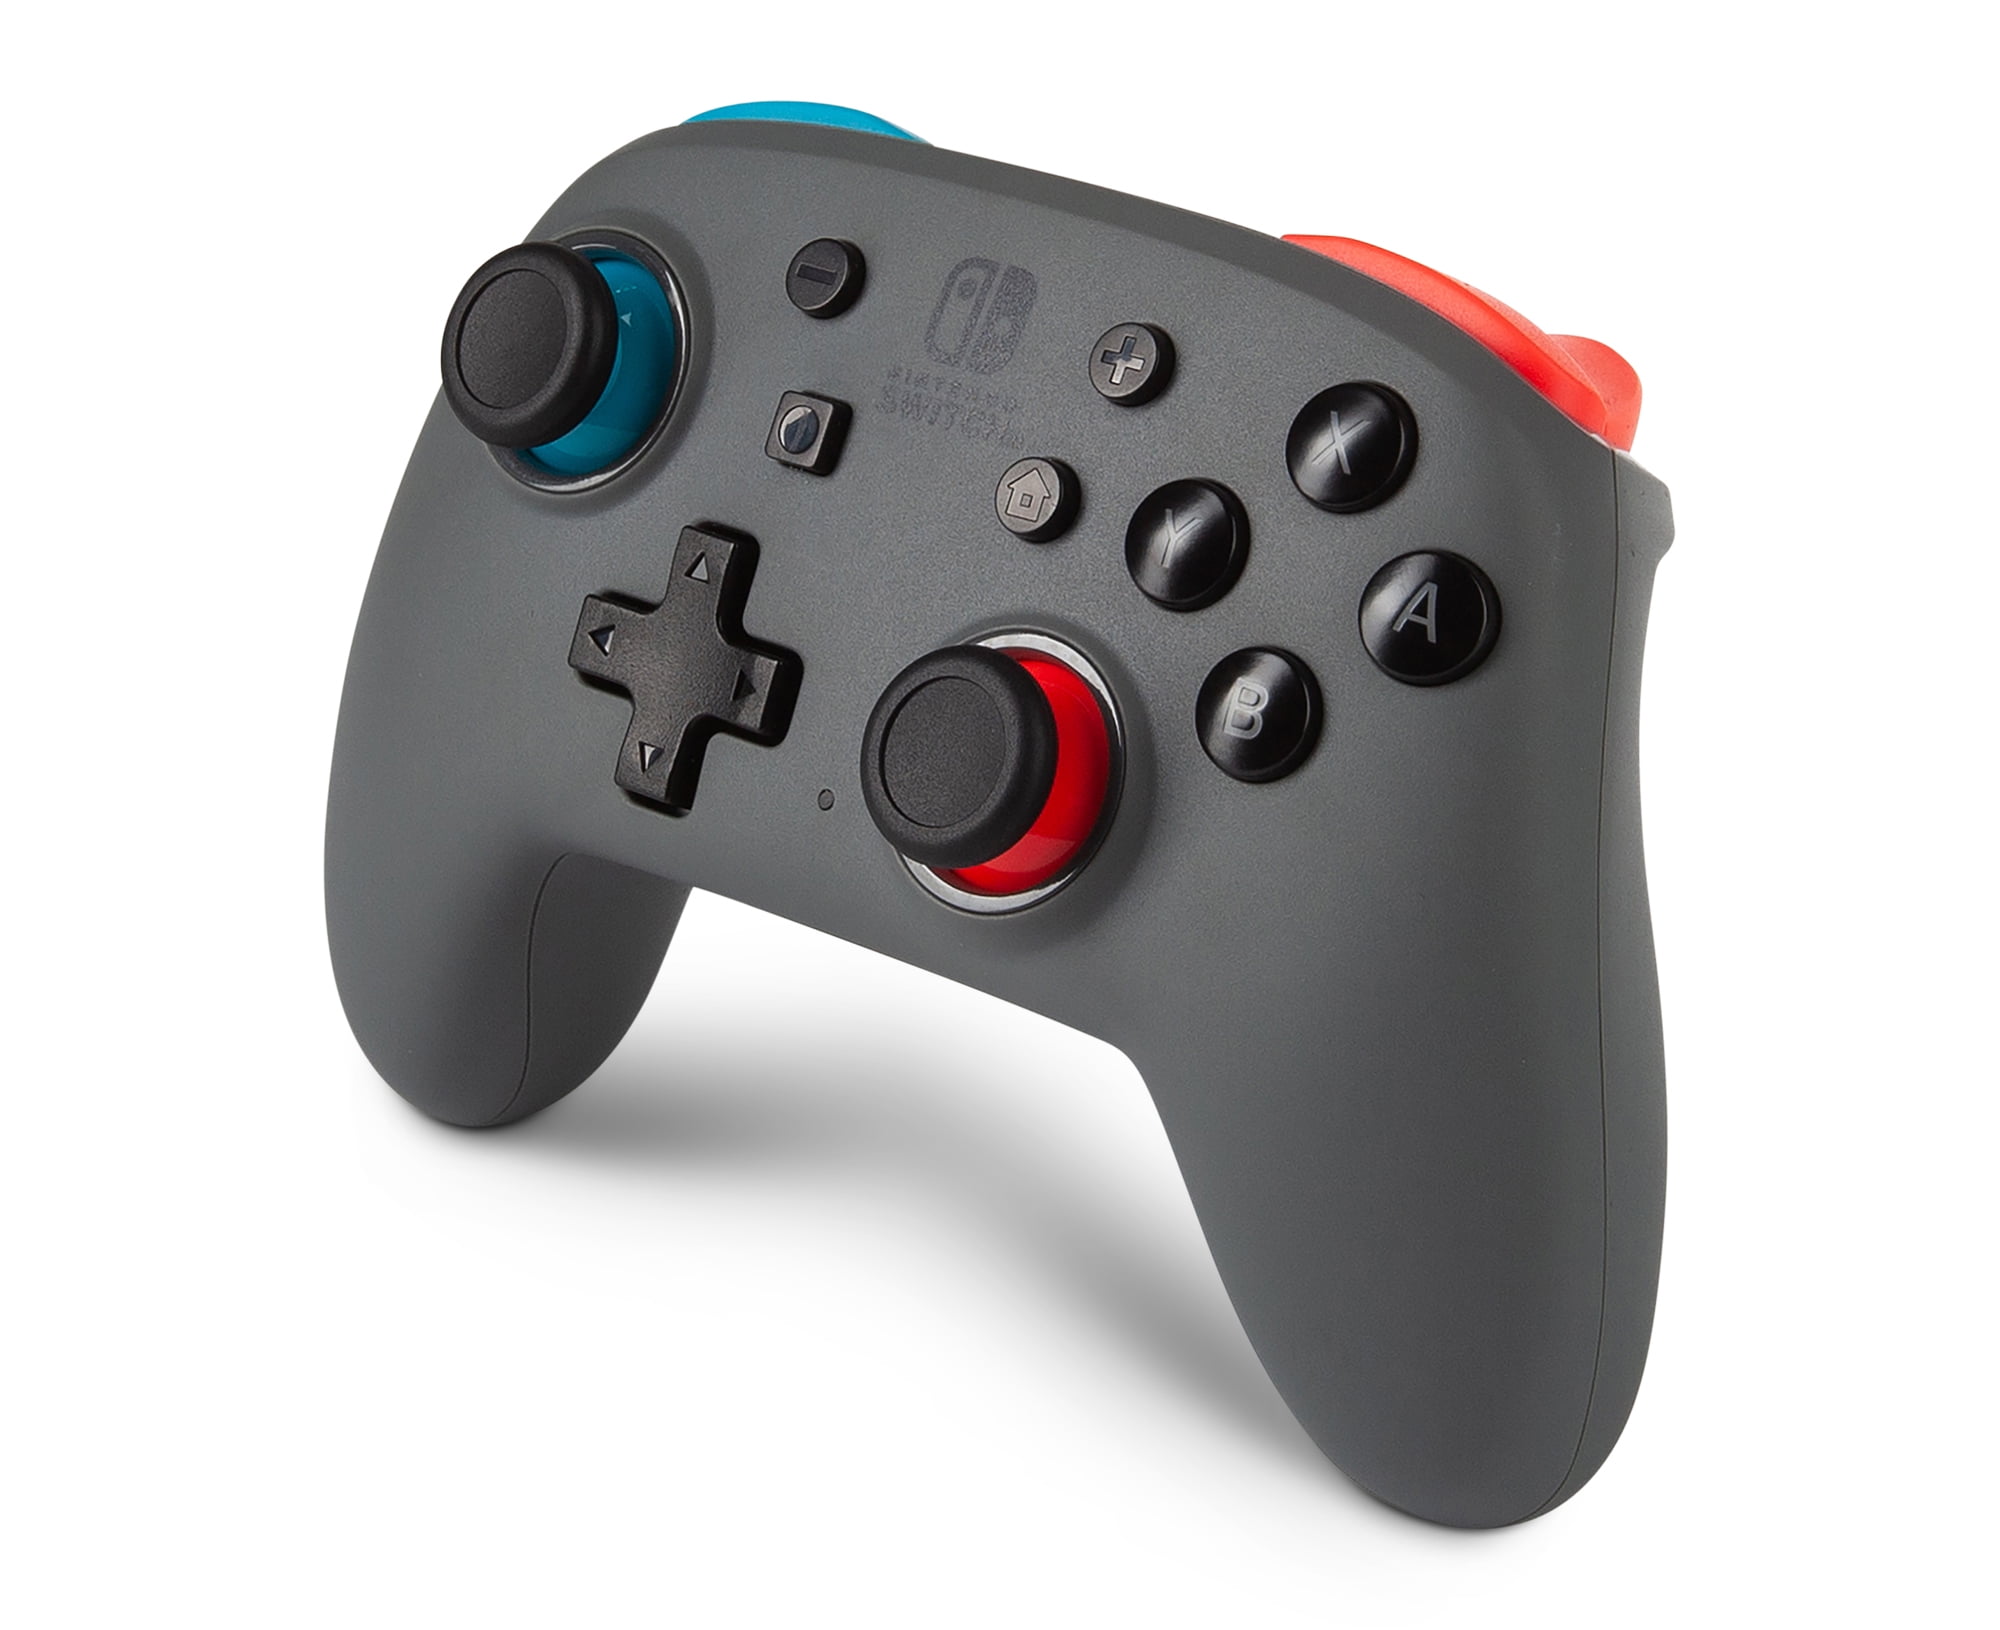 Voorman Theseus Klem PowerA Nano Enhanced Wireless Controller for Nintendo Switch - Grey-Neon -  Walmart.com